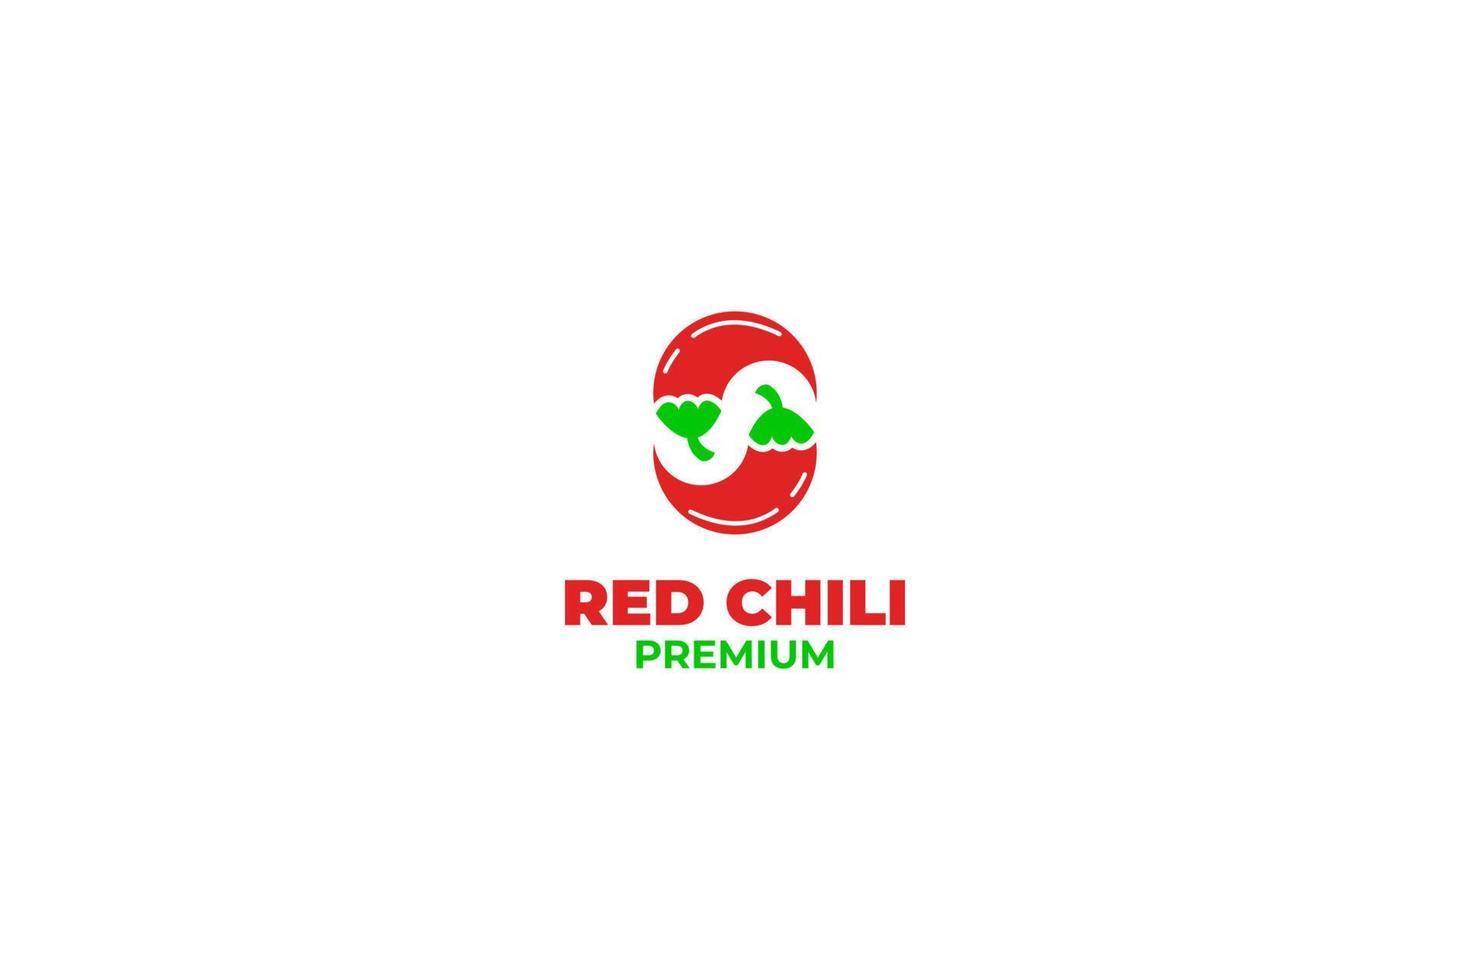 Flat pepper chili logo design vector illustration